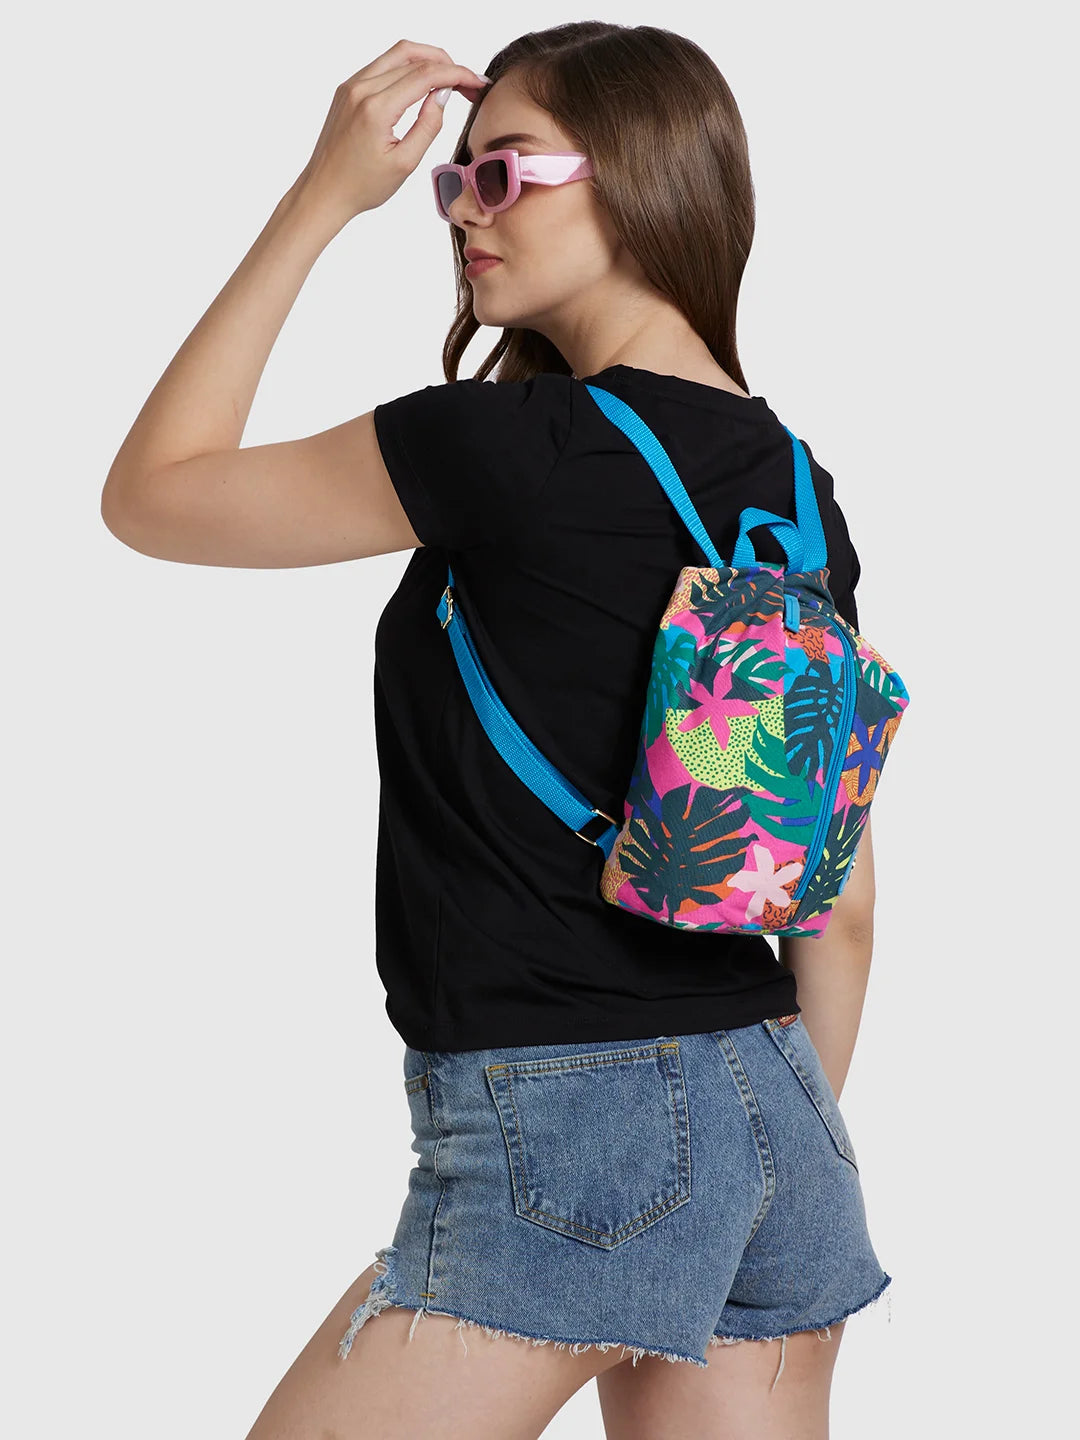 Caprese Octavia Backpack Small